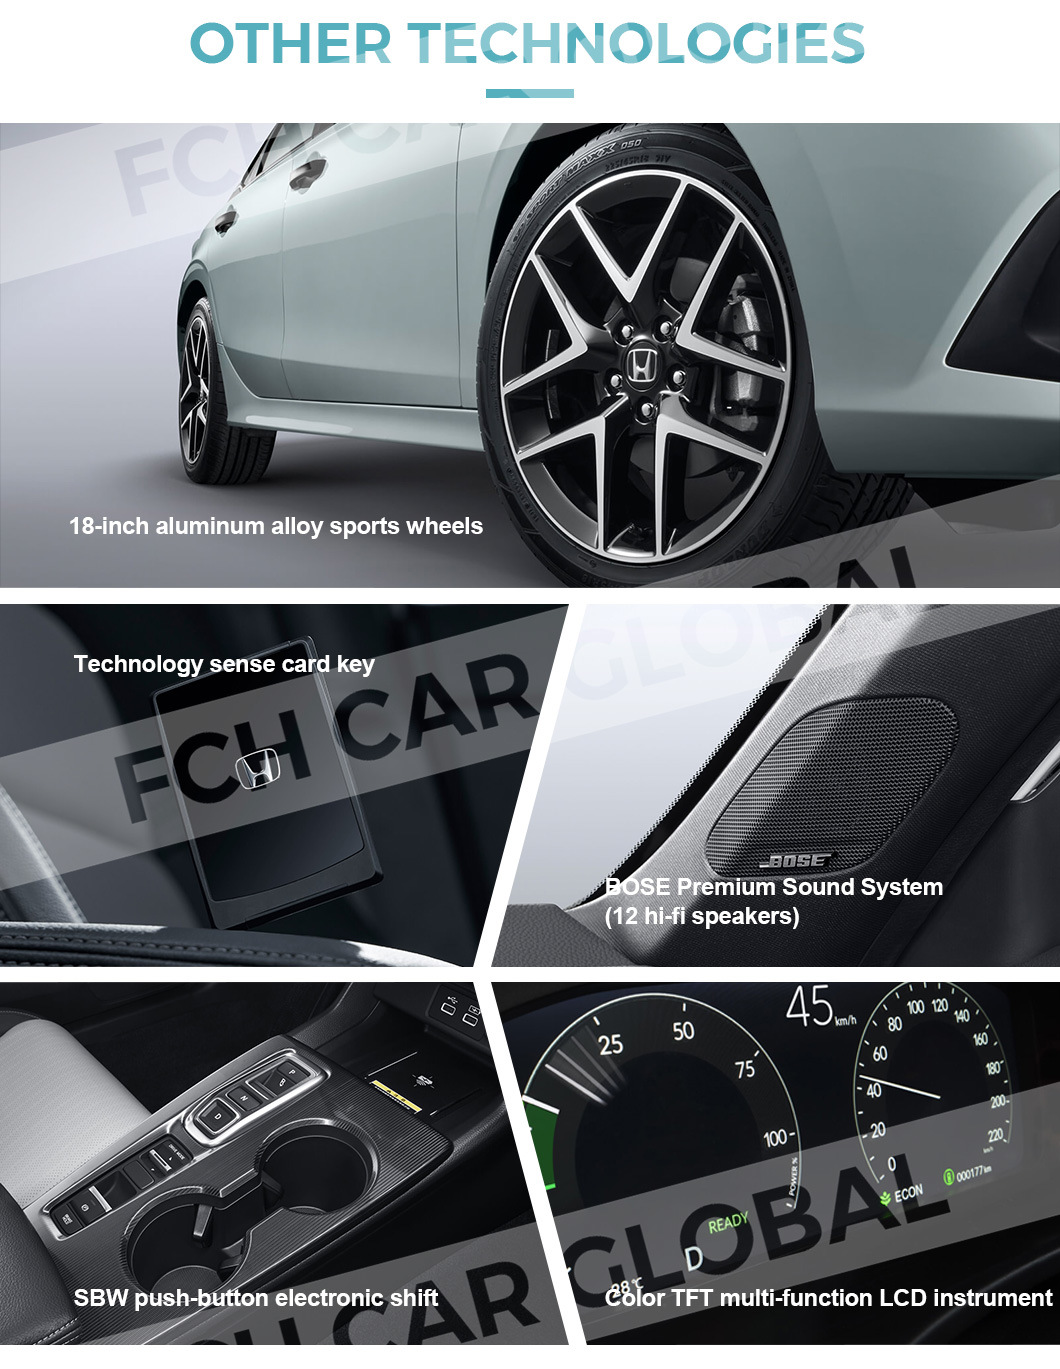 2016 2023 Honda Civic Car Type-R Used Car New Electric Vehicle